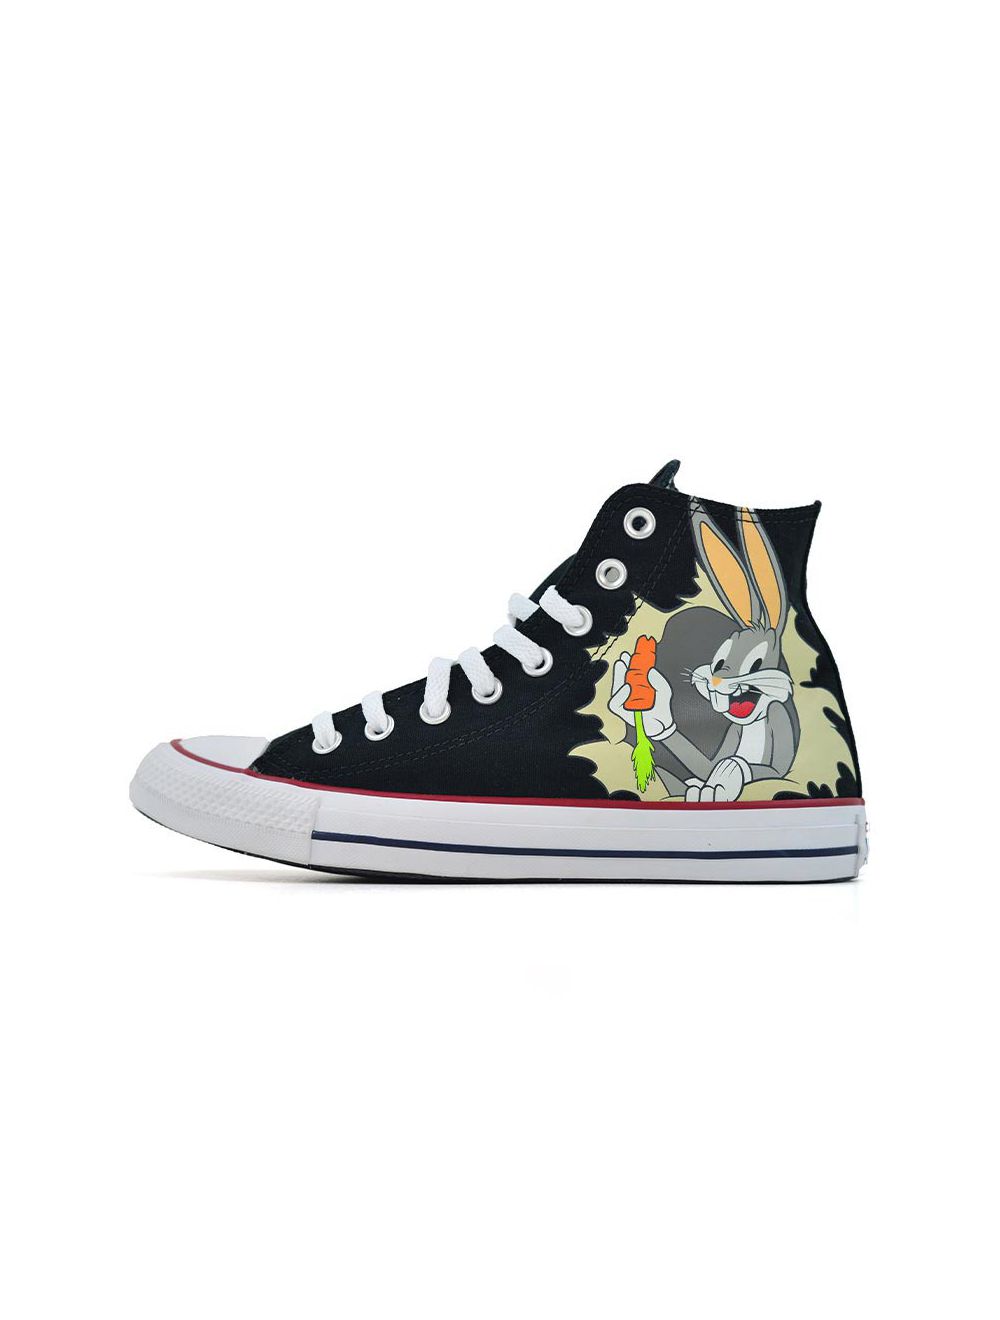 Converse x Looney Tunes Chuck Taylor All Star Hi 'Bugs Bunny' Kids Black